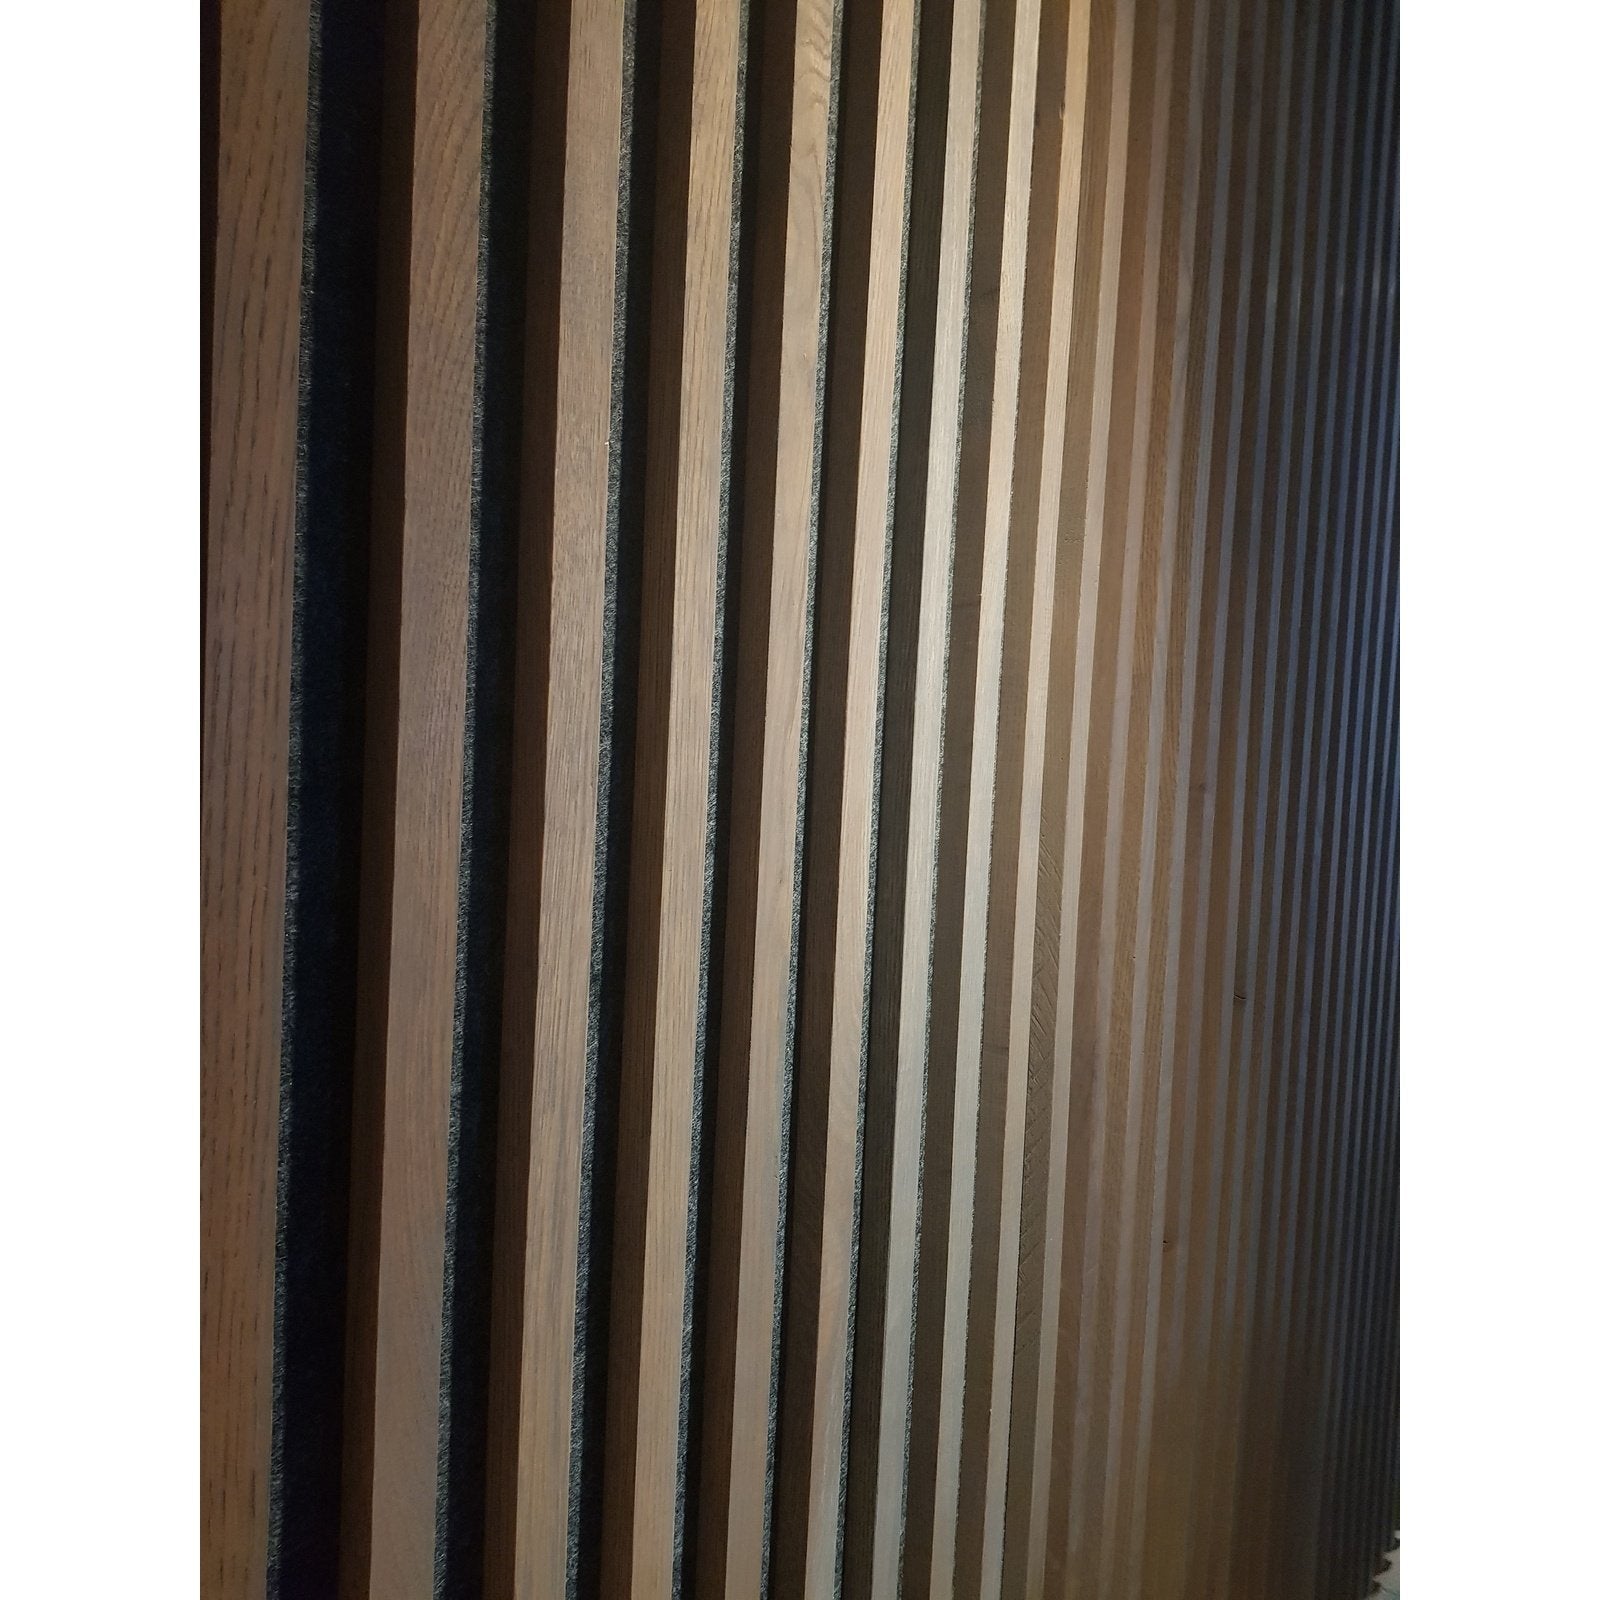 Oak slat wall panel with grey stain